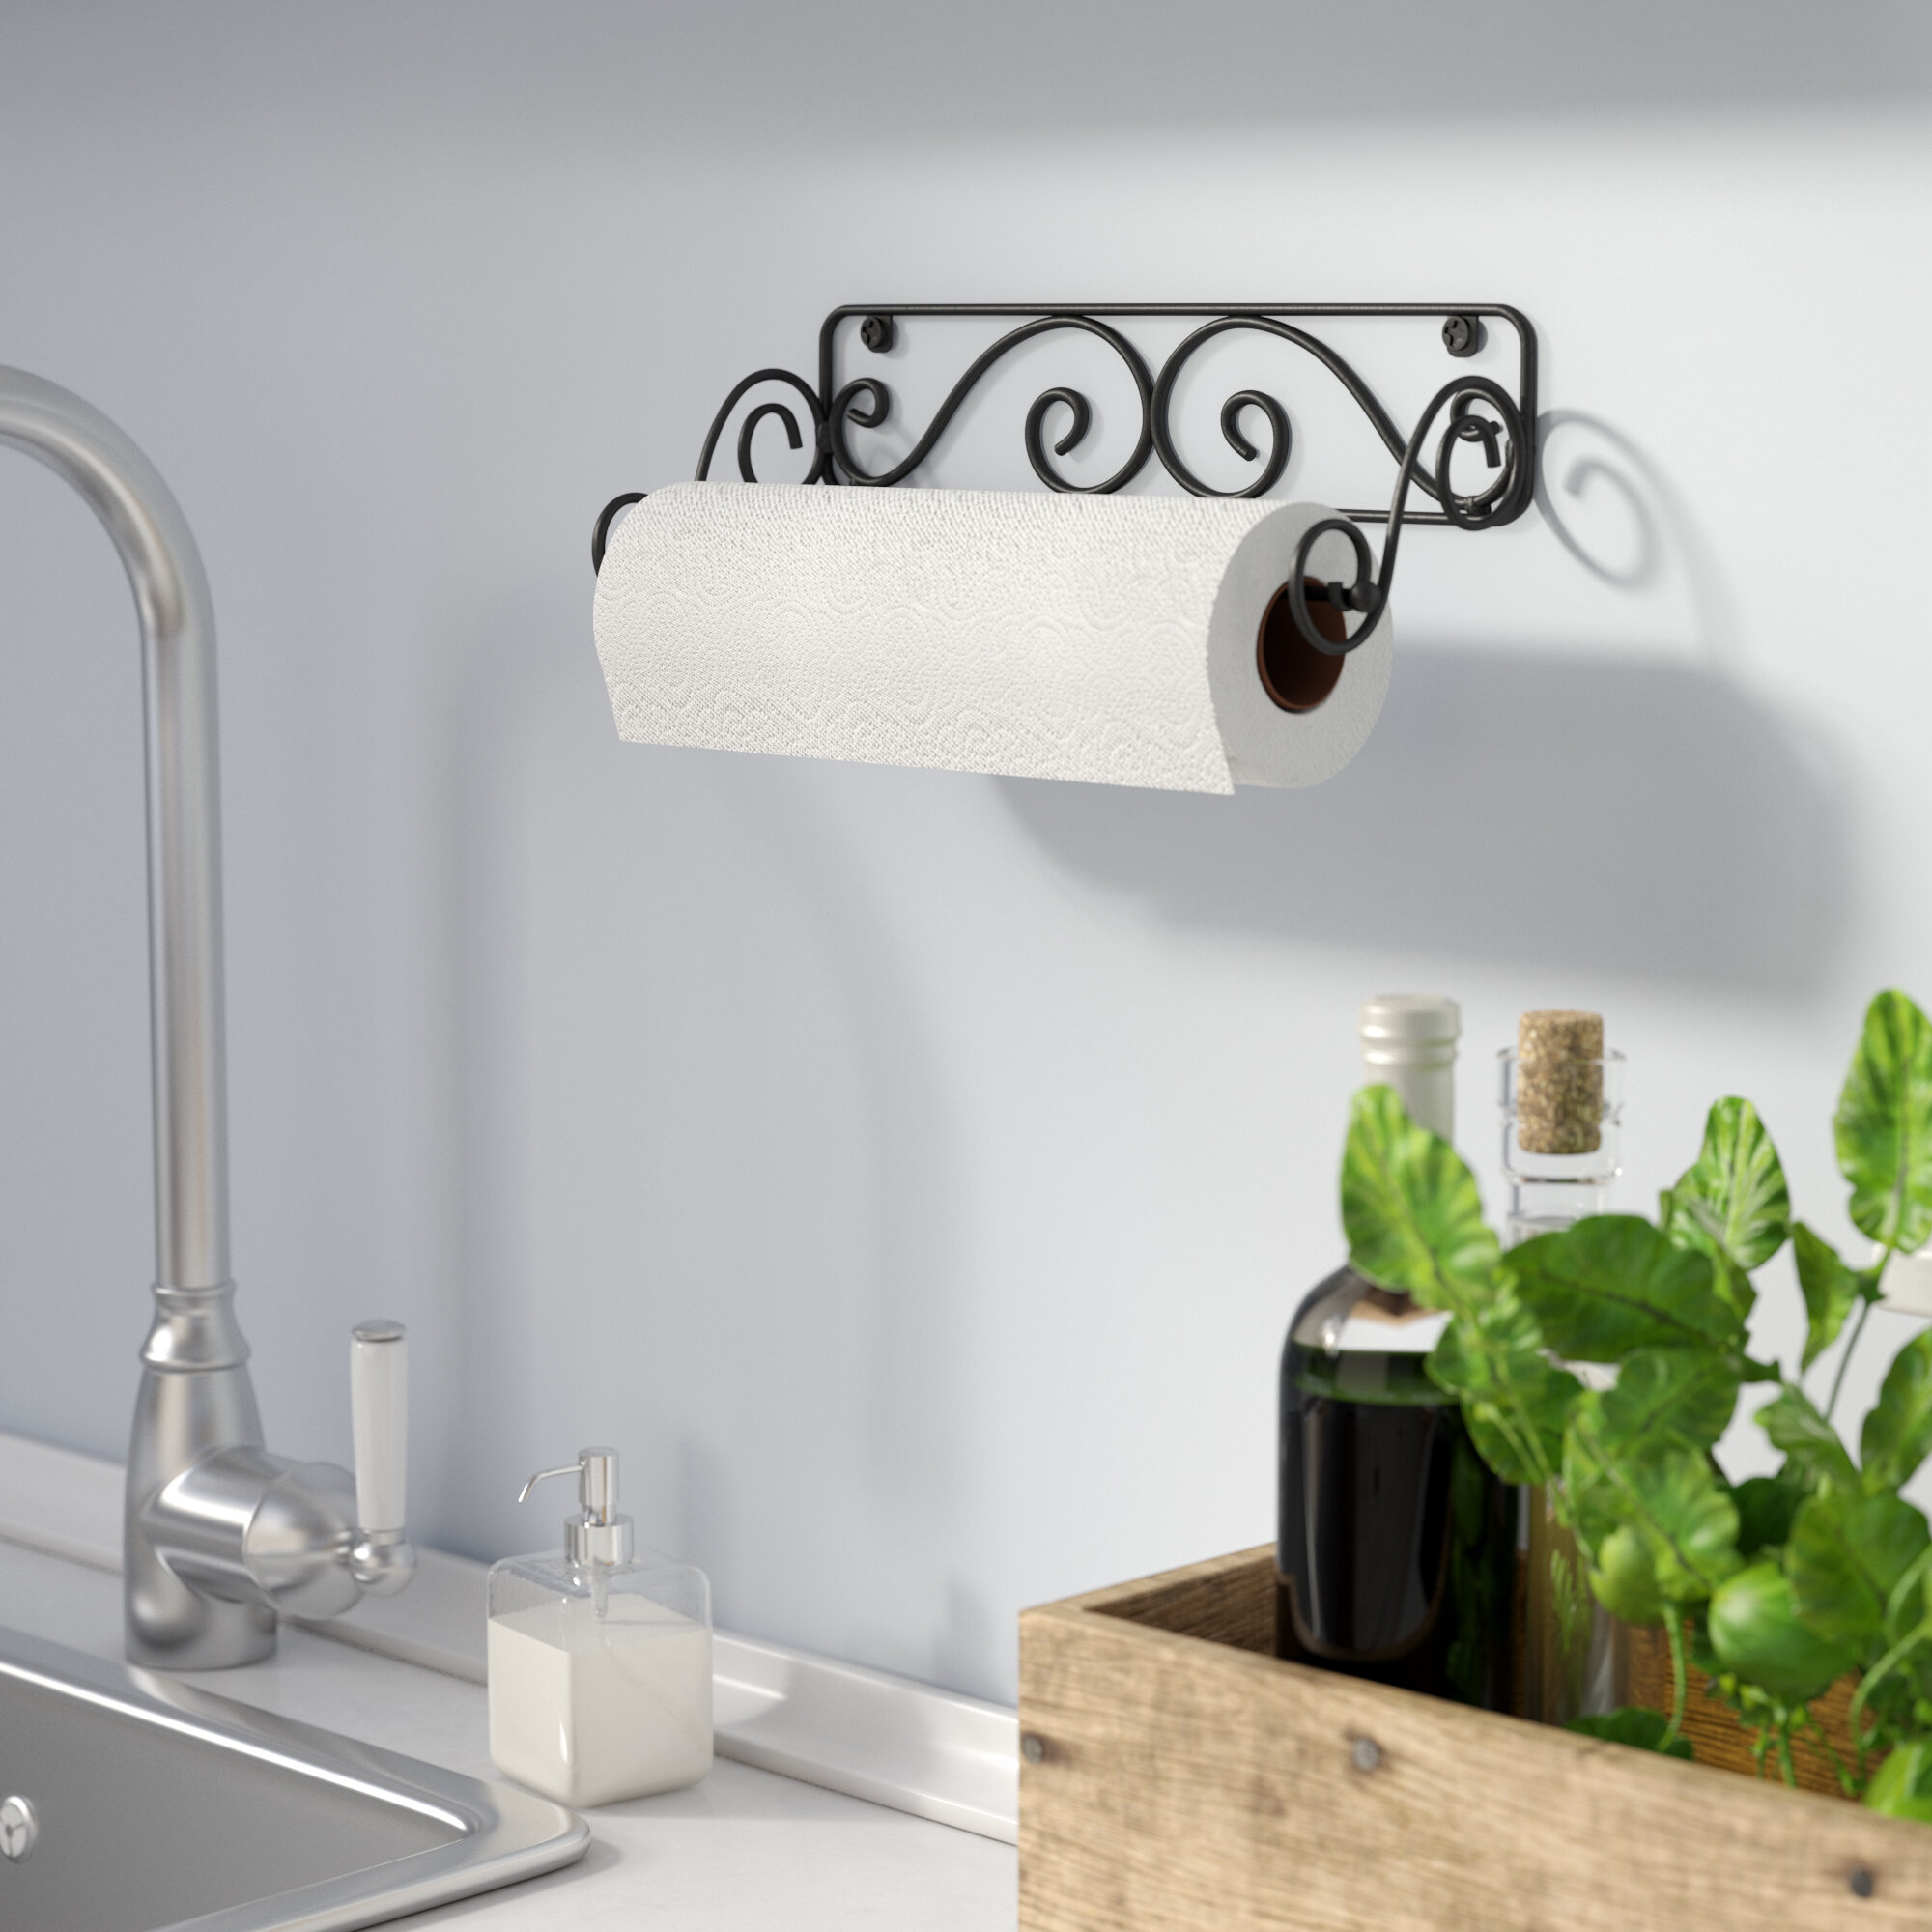 https://visualhunt.com/photos/title/decorative-paper-towel-holder-wall-mount.jpg